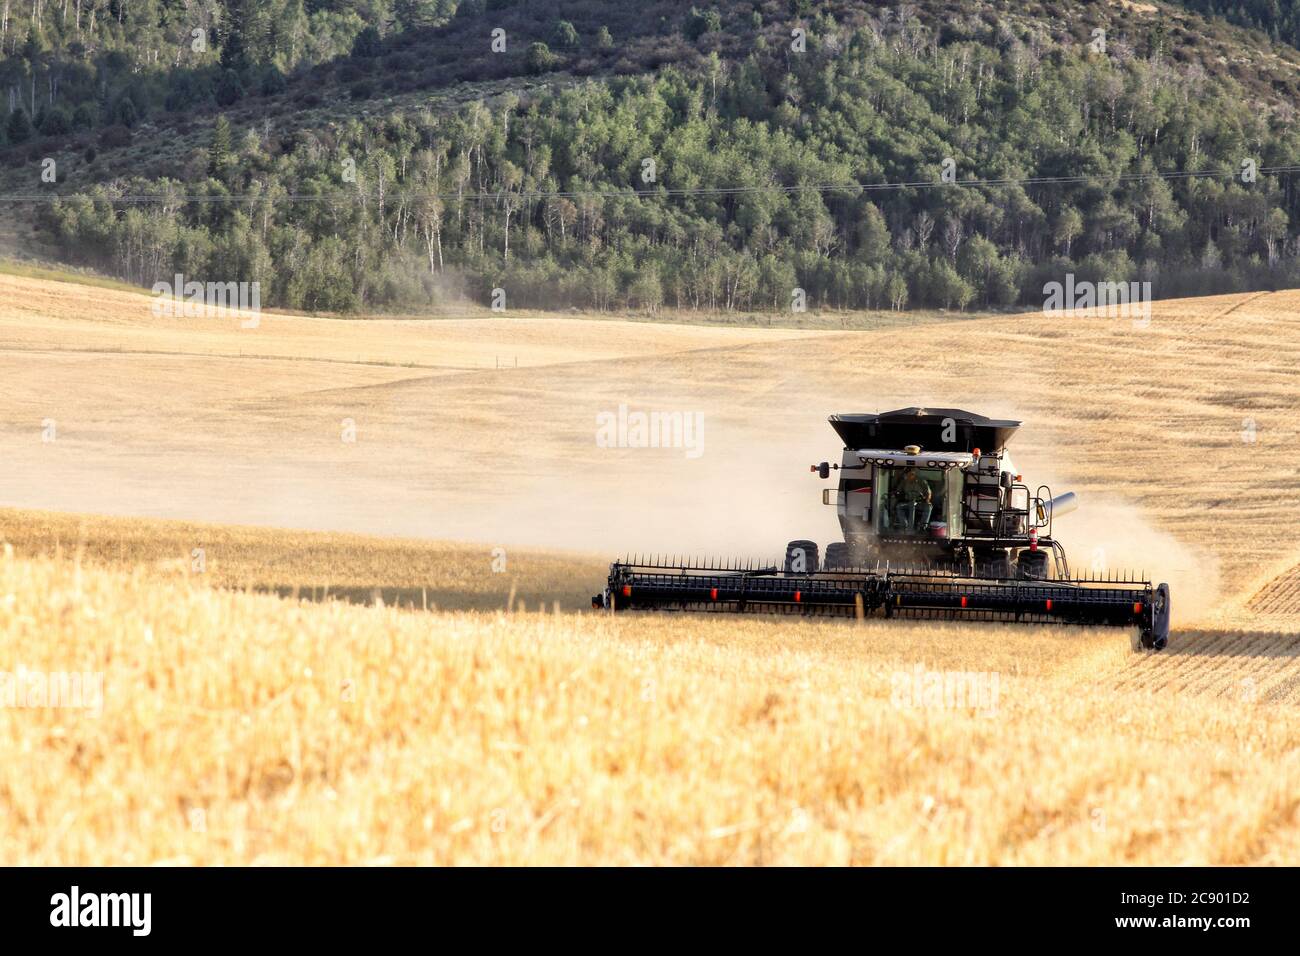 Ririe, Idaho, USA Aug. 8, 2016 Farm machinery harvesting wheat in the fertile farm fields of Idaho, with the Teton Mountain range in the background. Stock Photo